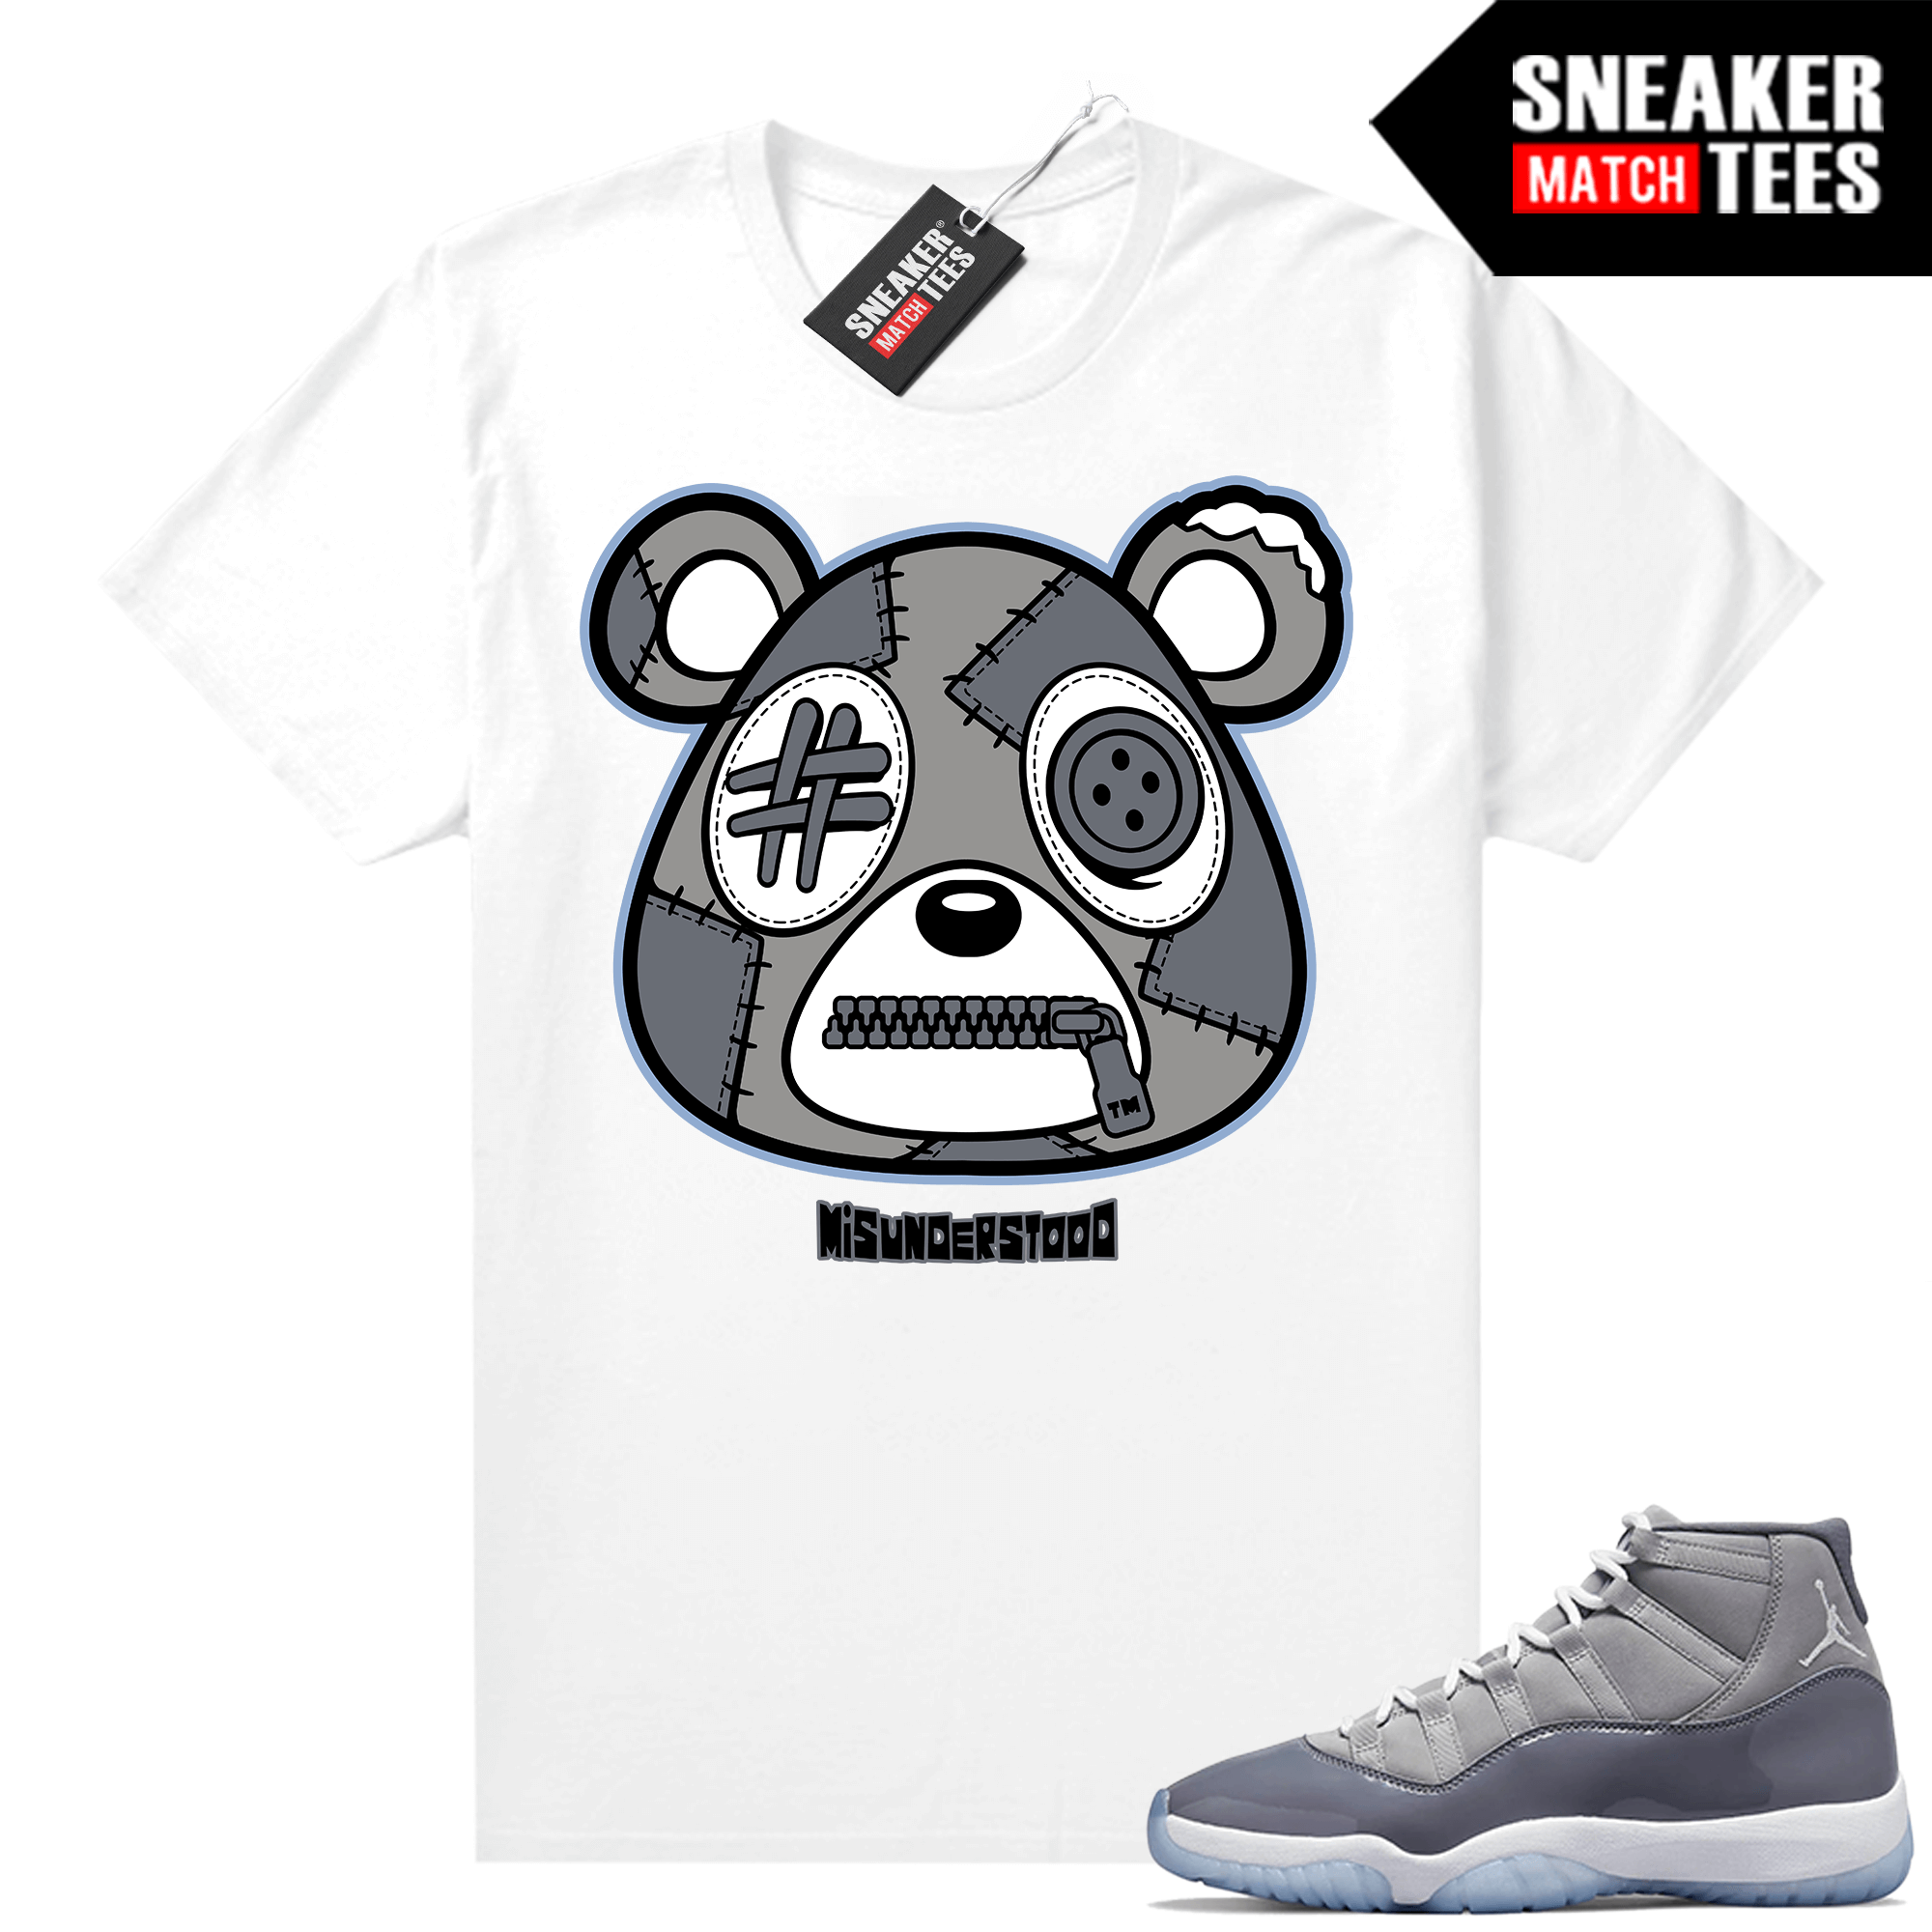 Cool Grey 11 Jordan Sneaker Match Tees White Misunderstood Bear